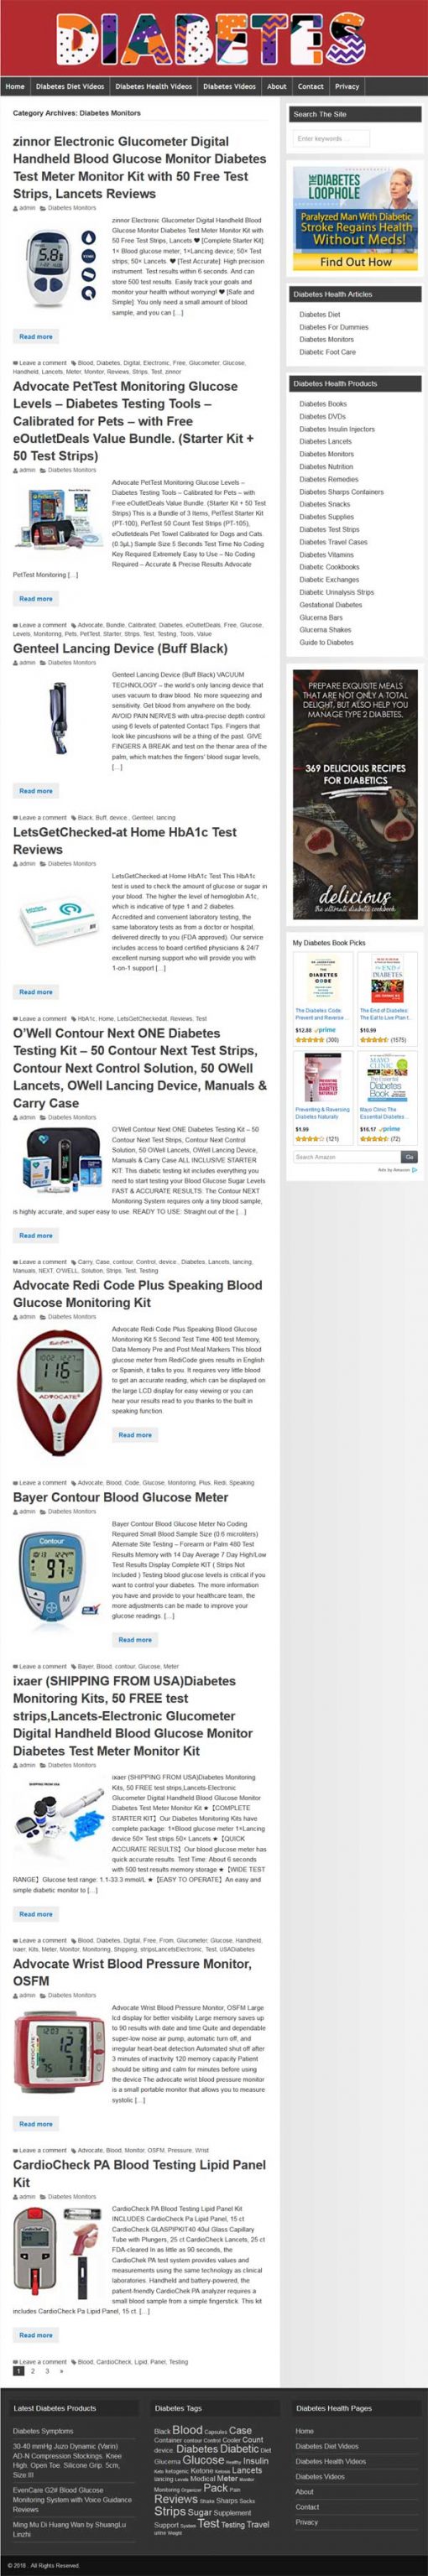 Diabetes Health PLR Website and Amazon Turnkey Store